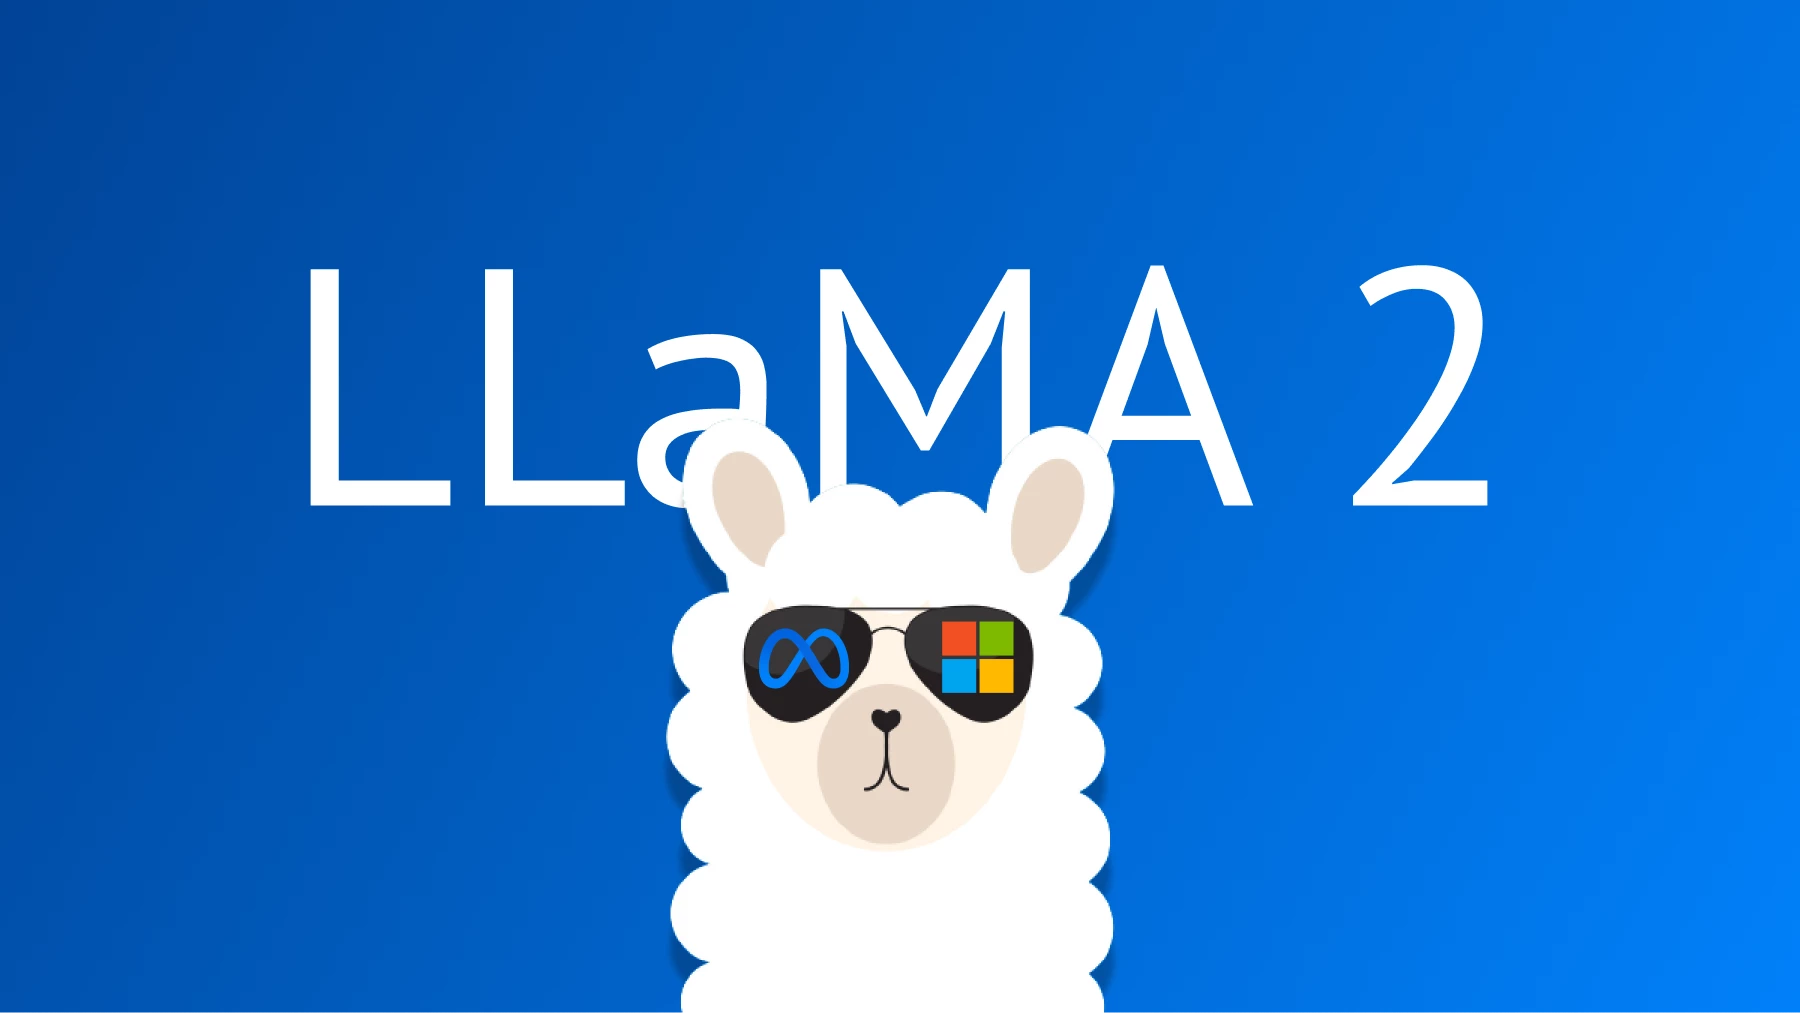 LLaMA 2 : Le modèle d'IA Open Source de Meta